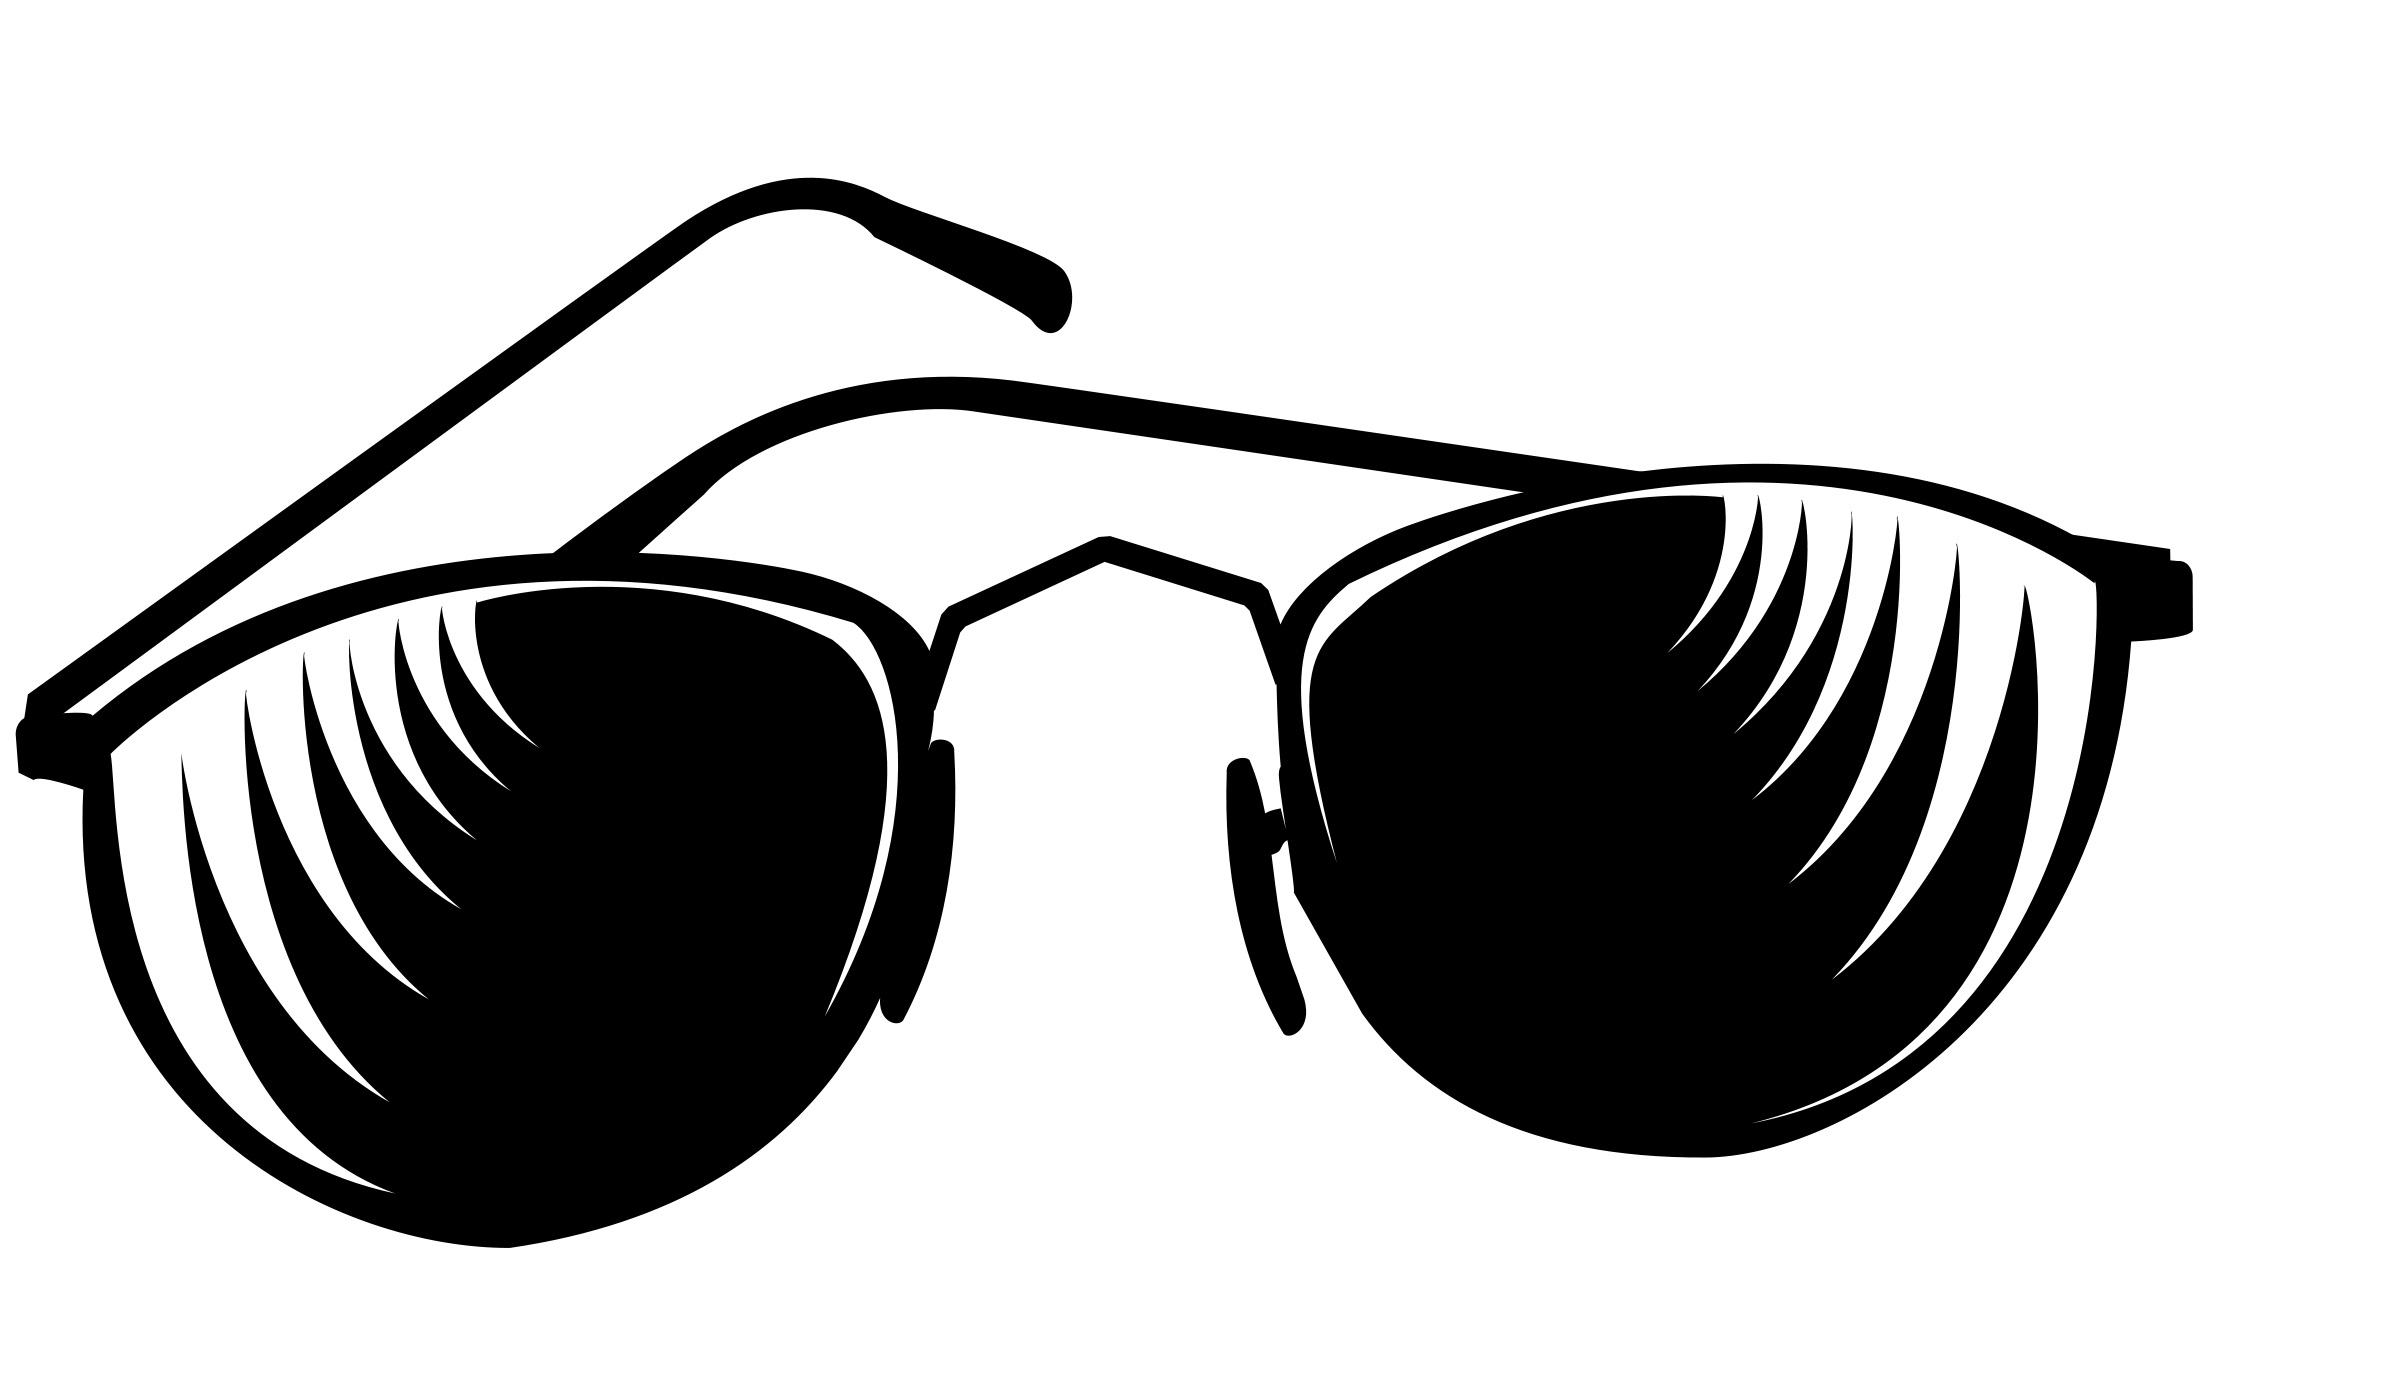 Sunglasses clip art black and white free clipart